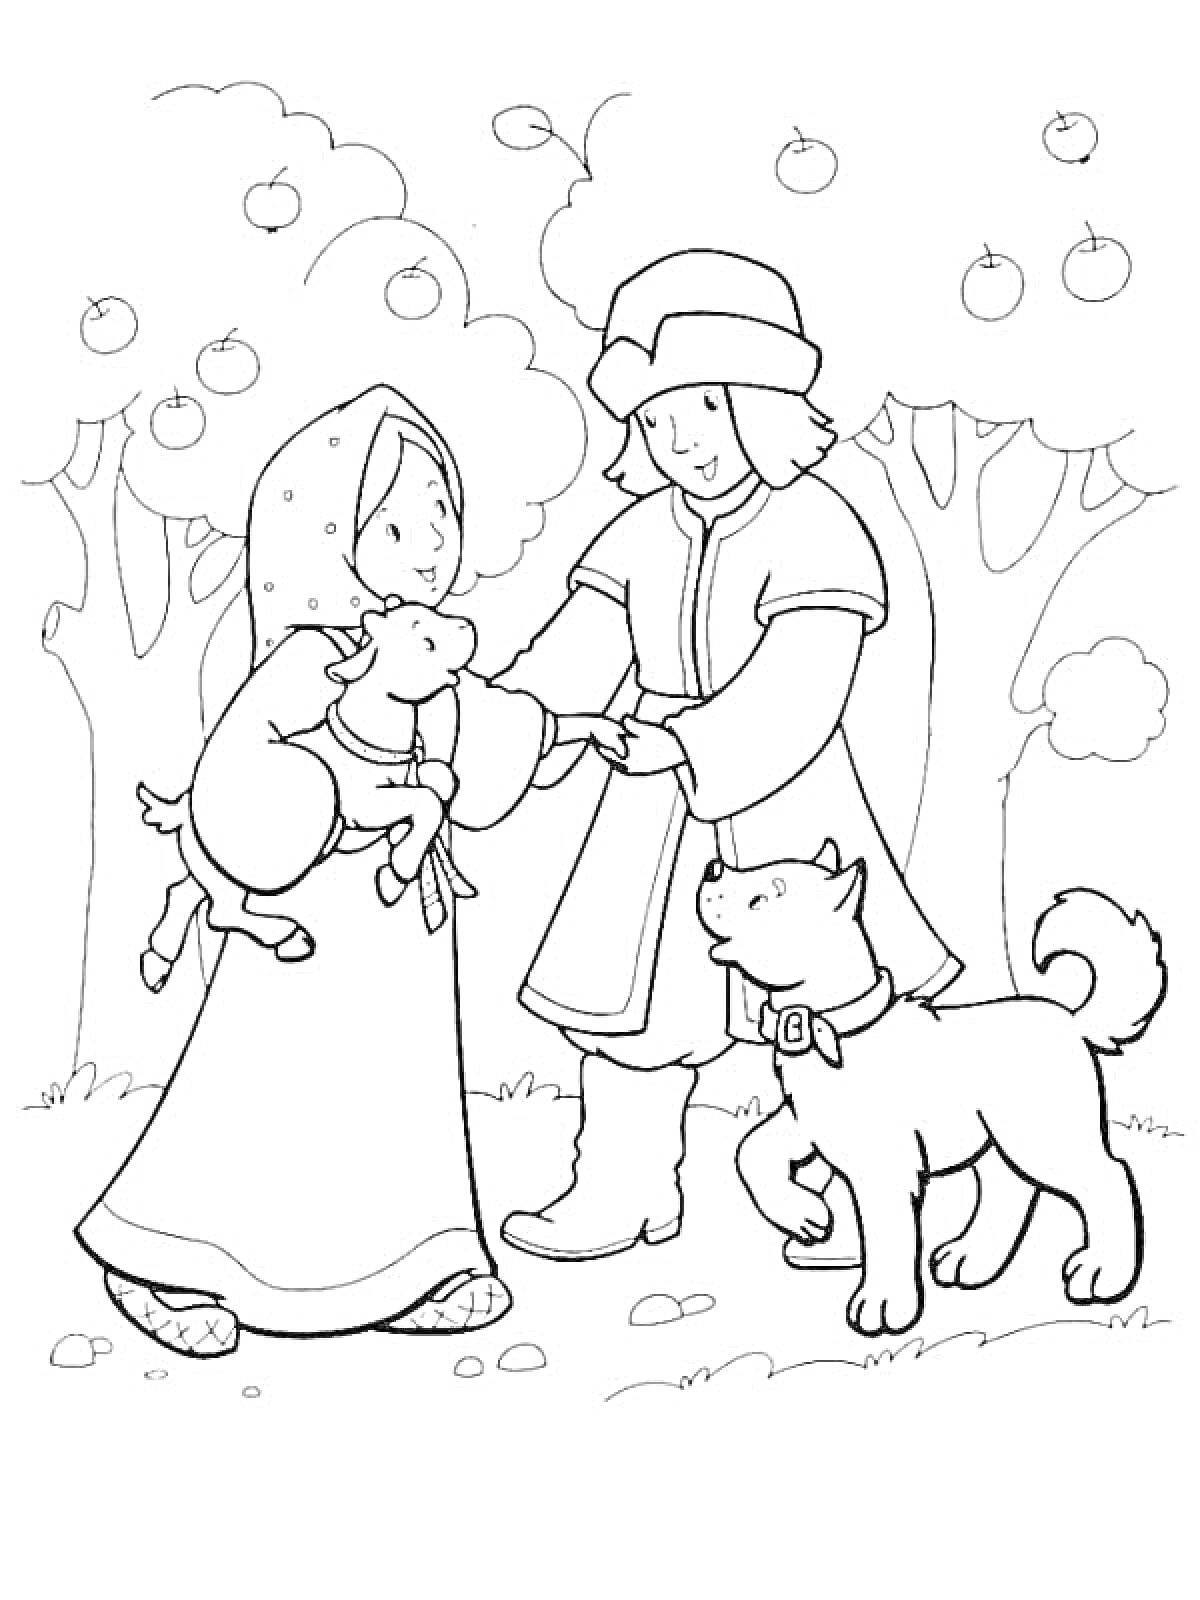 Сестрица Аленушка и братец Иванушка с козленком и собакой в яблоневом саду